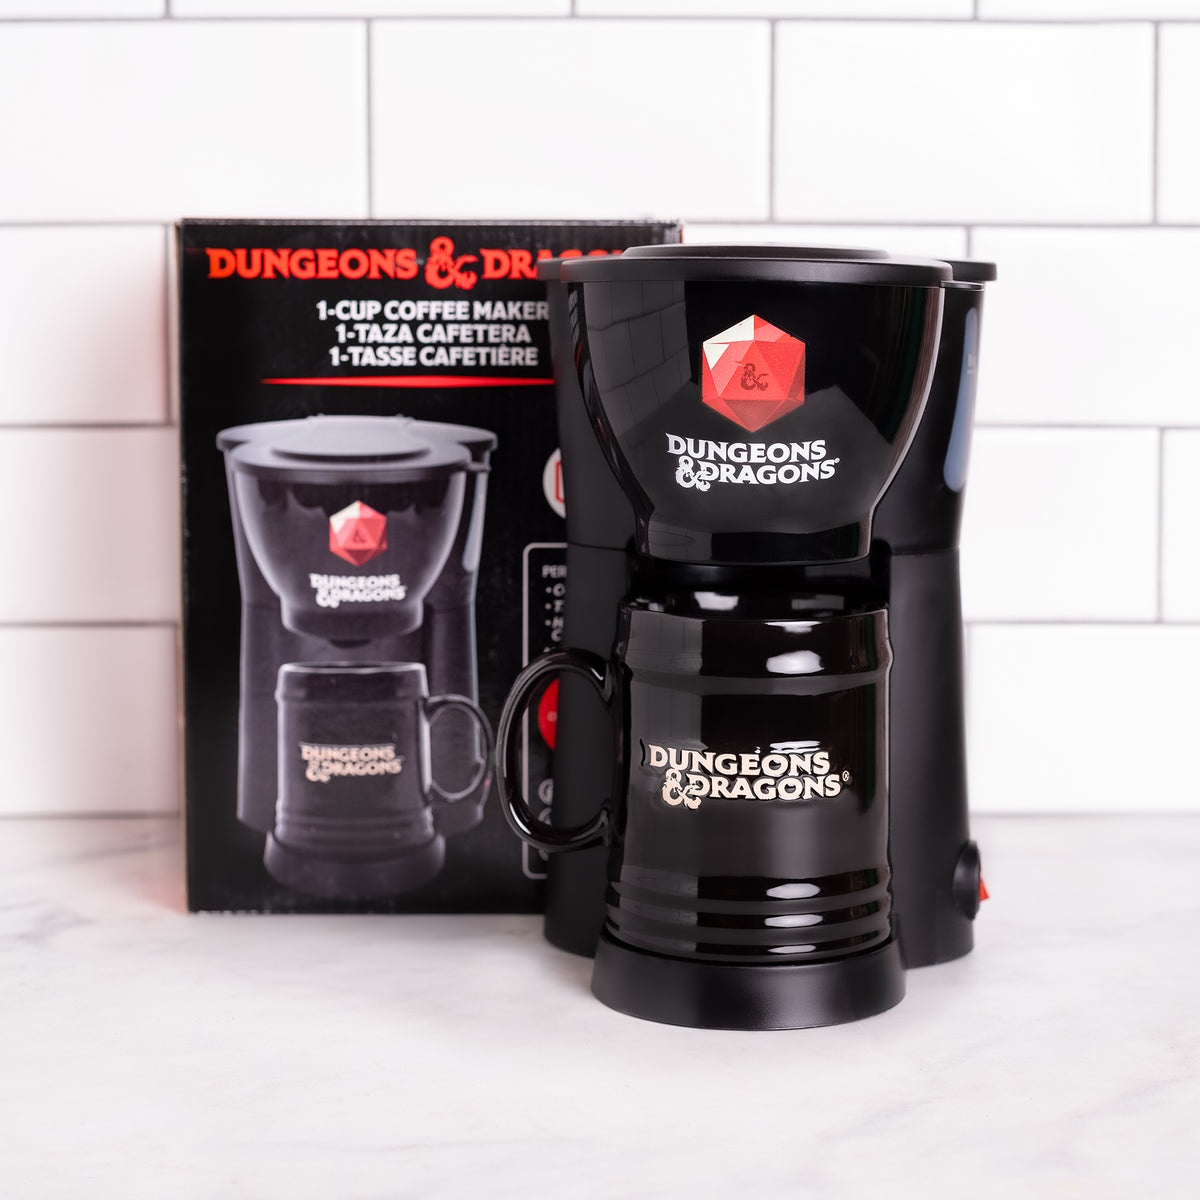 Black & Decker Single Serve Coffee Maker with Travel Mug 